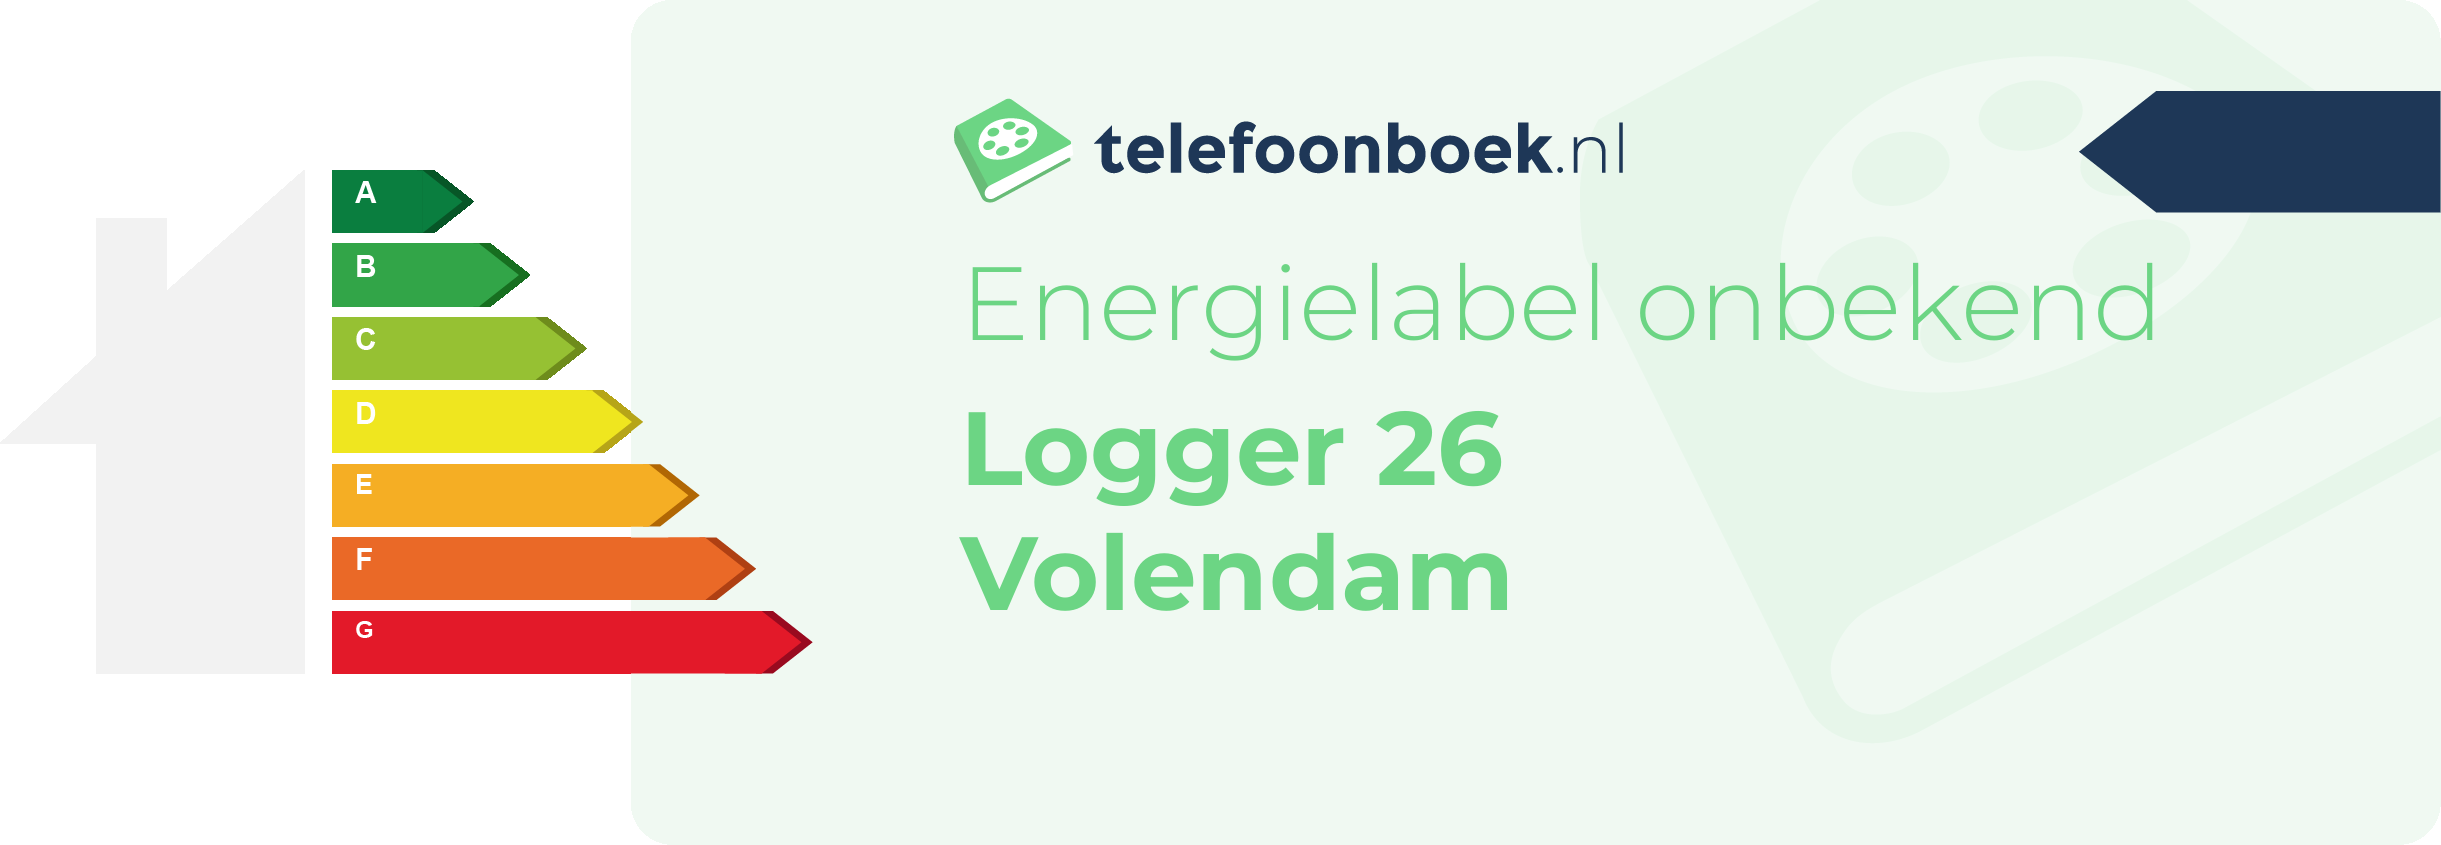 Energielabel Logger 26 Volendam